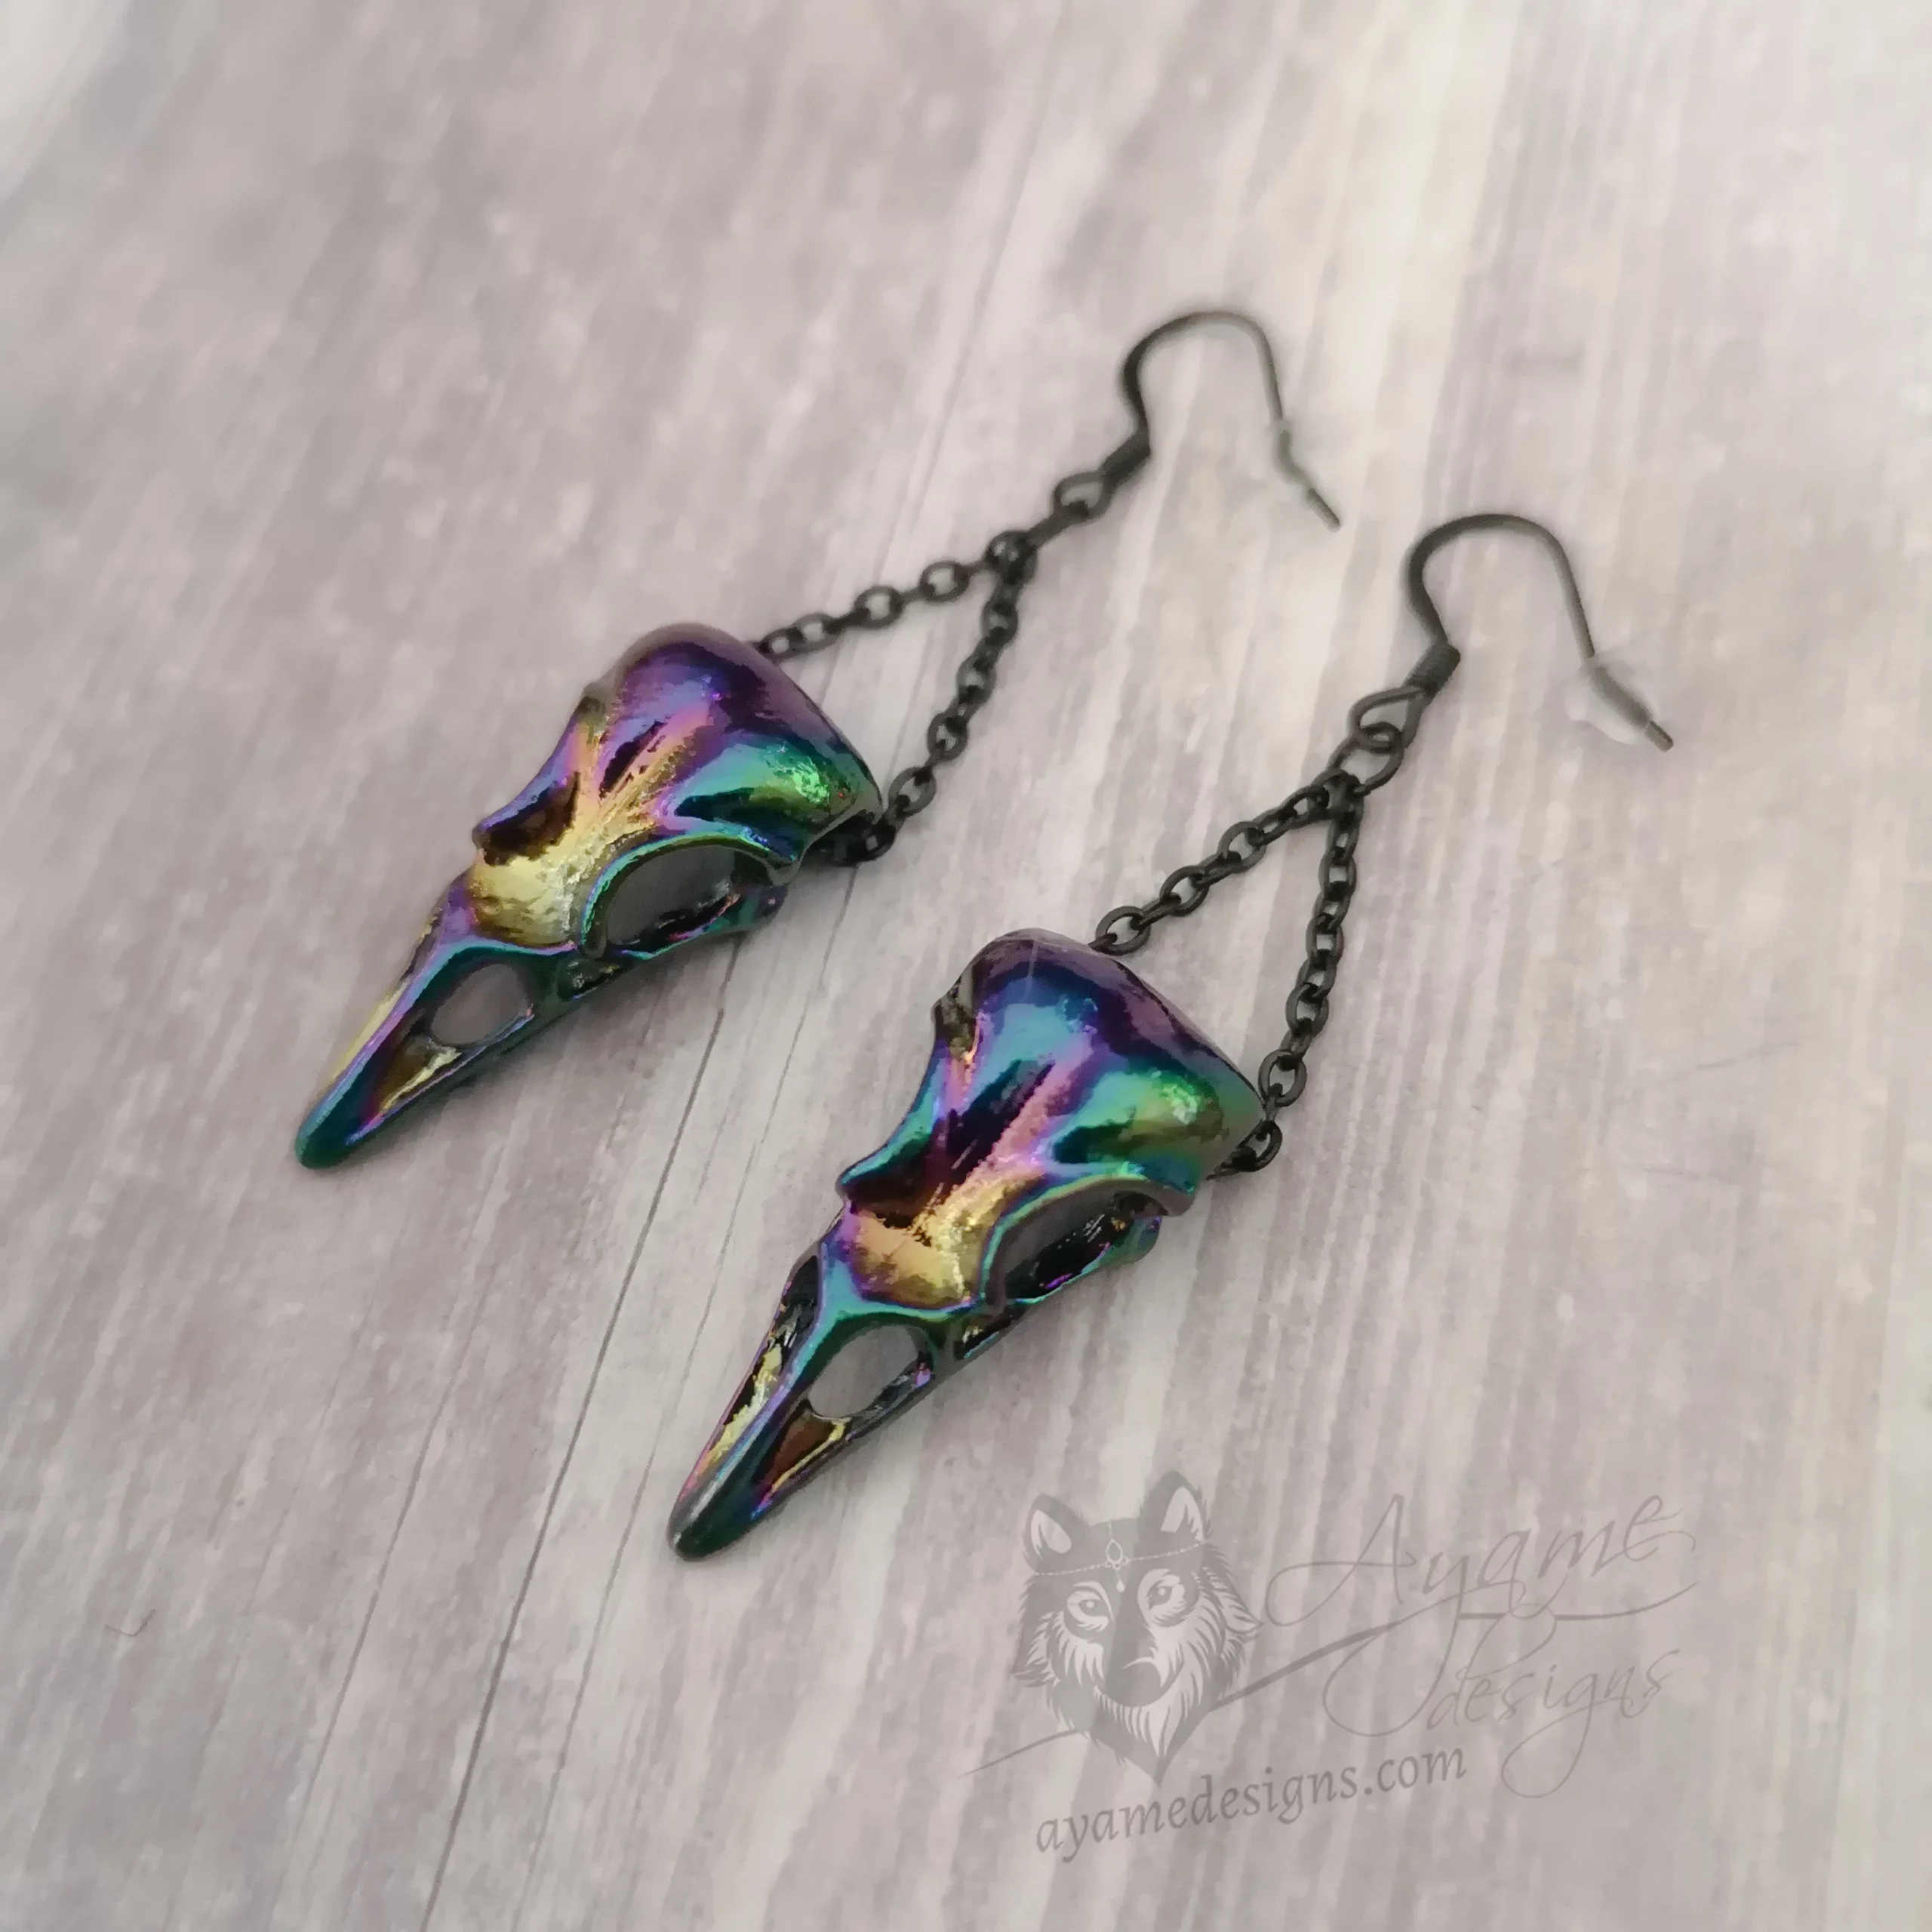 Earrings with rainbow bird skull pendants hanging on black stainless steel chain, on black stainless steel earring hooks